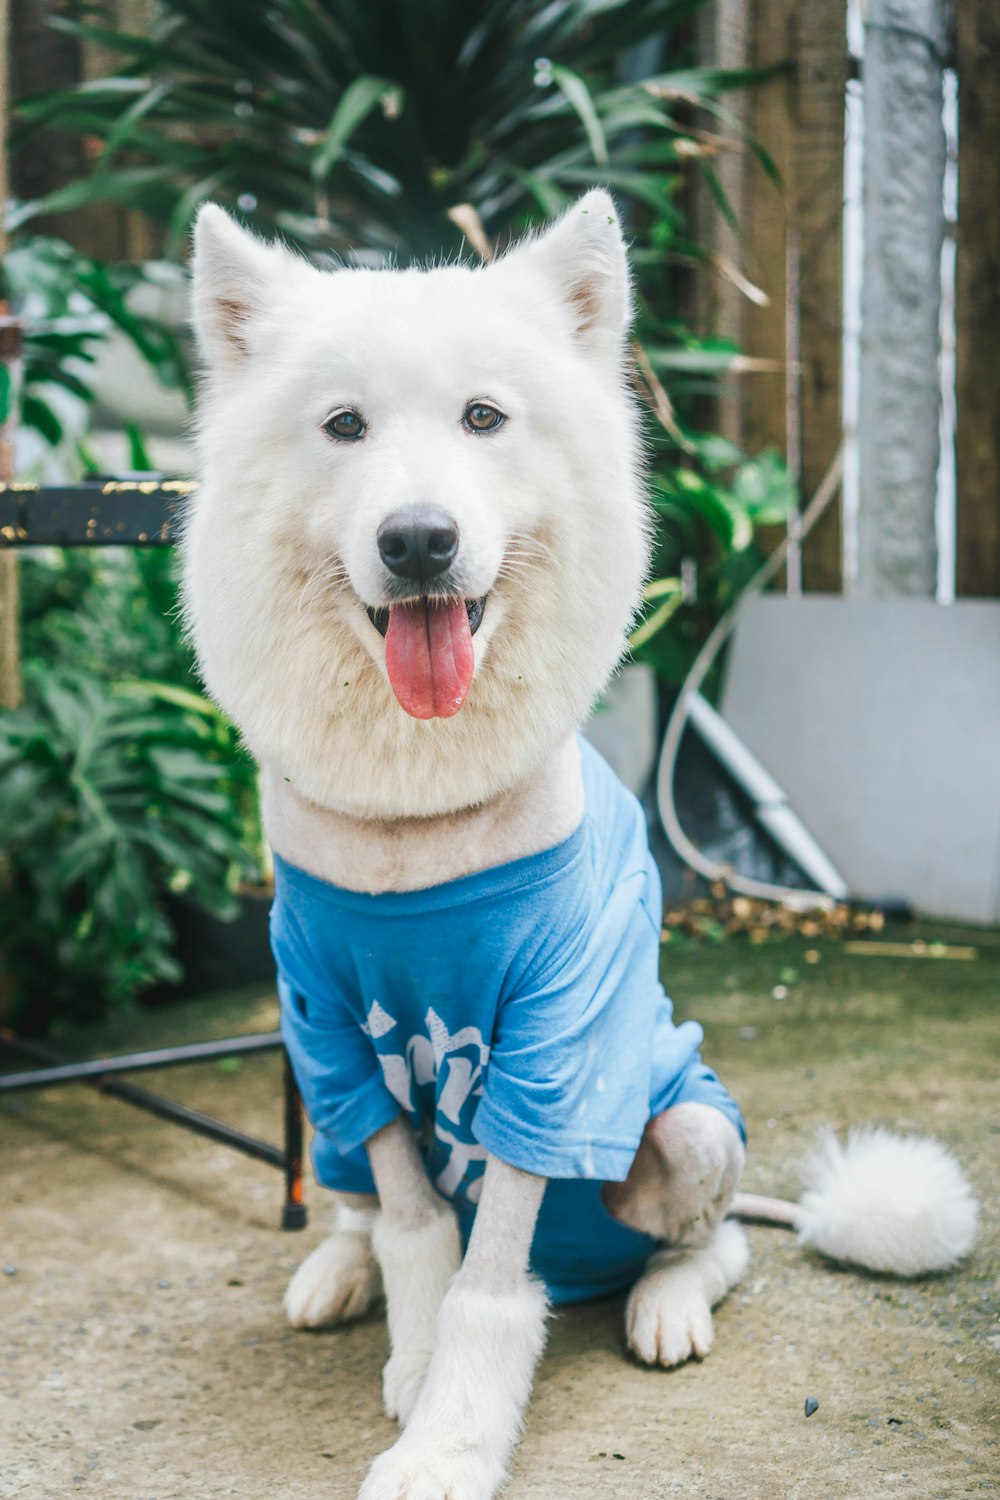 a large white dog wearing a blue shirt